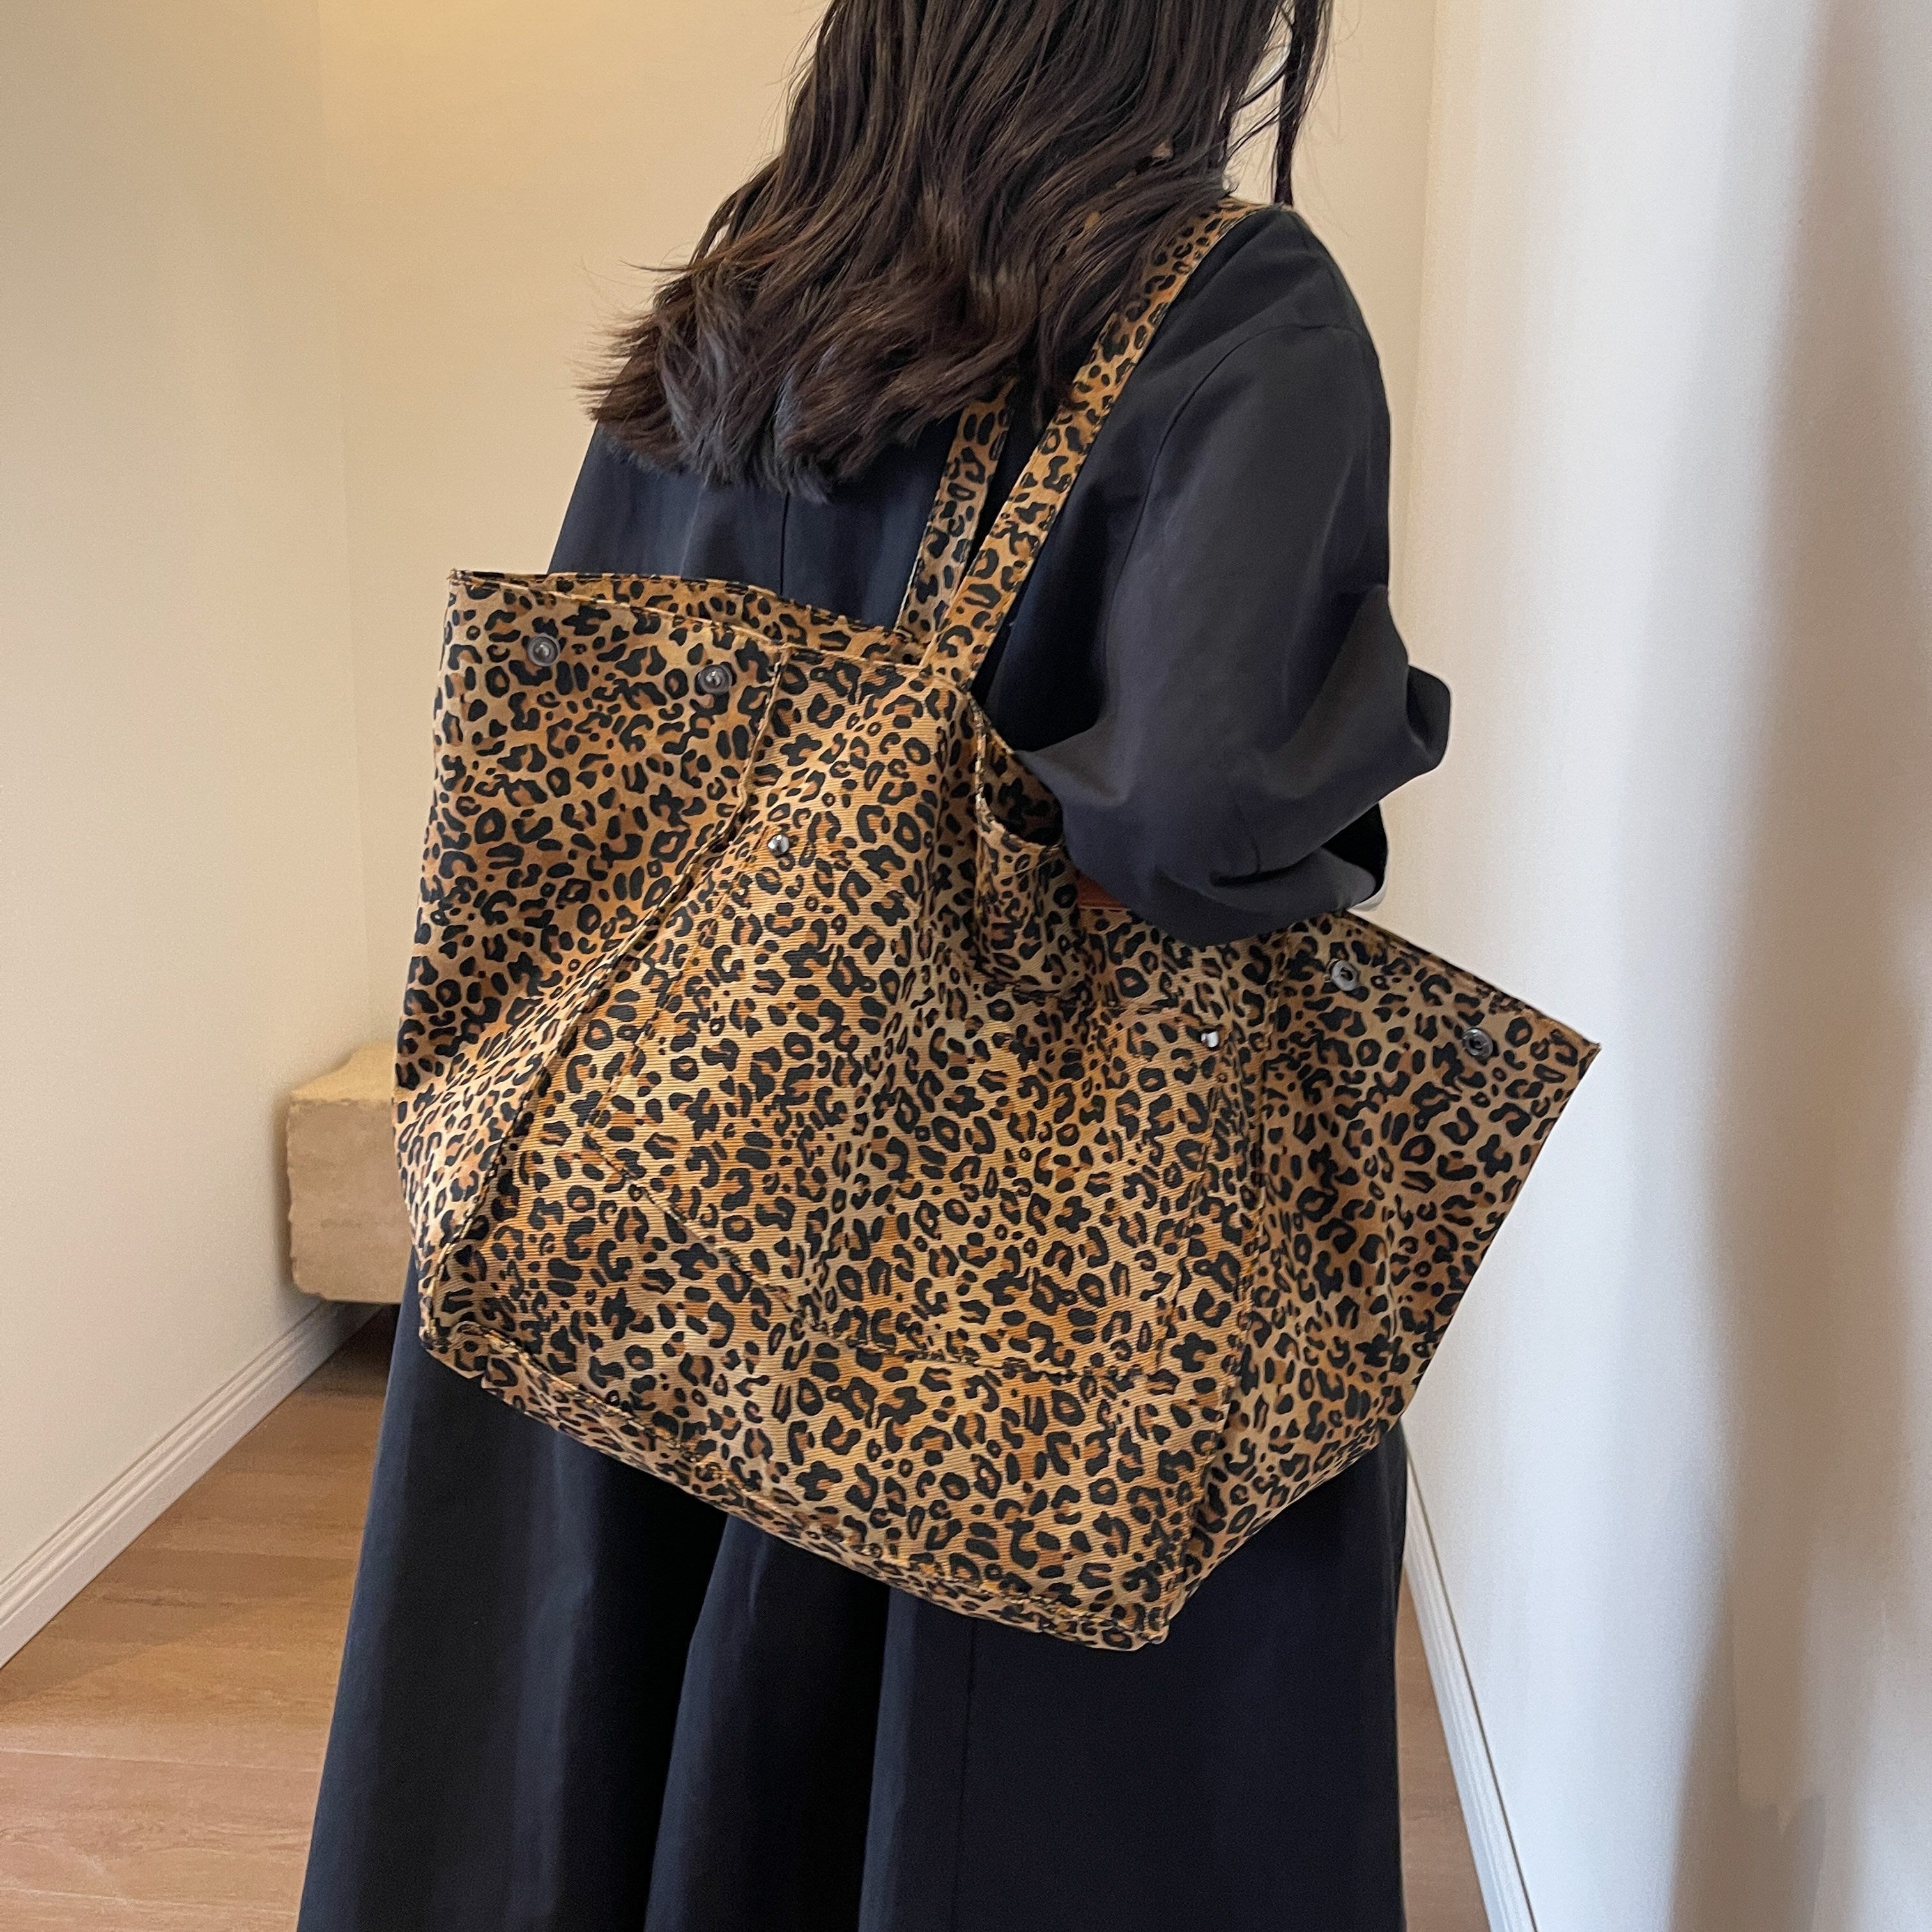 Stylish Leopard Pattern Tote Bag, Large Capacity Shopping Handbag, Perfect Underarm Bag For Everyday Use